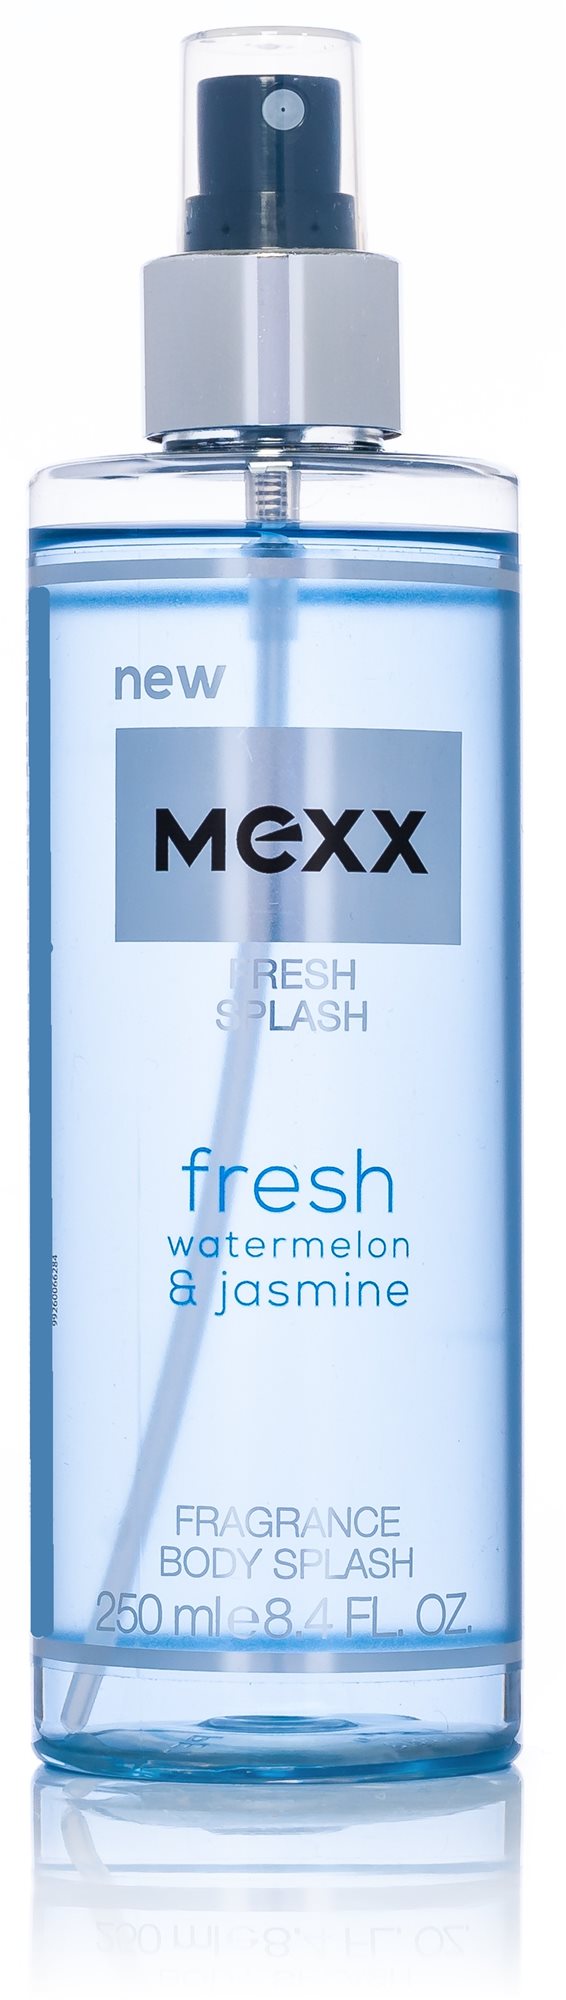 Testpermet MEXX Fresh Splash Testpermet 250 ml